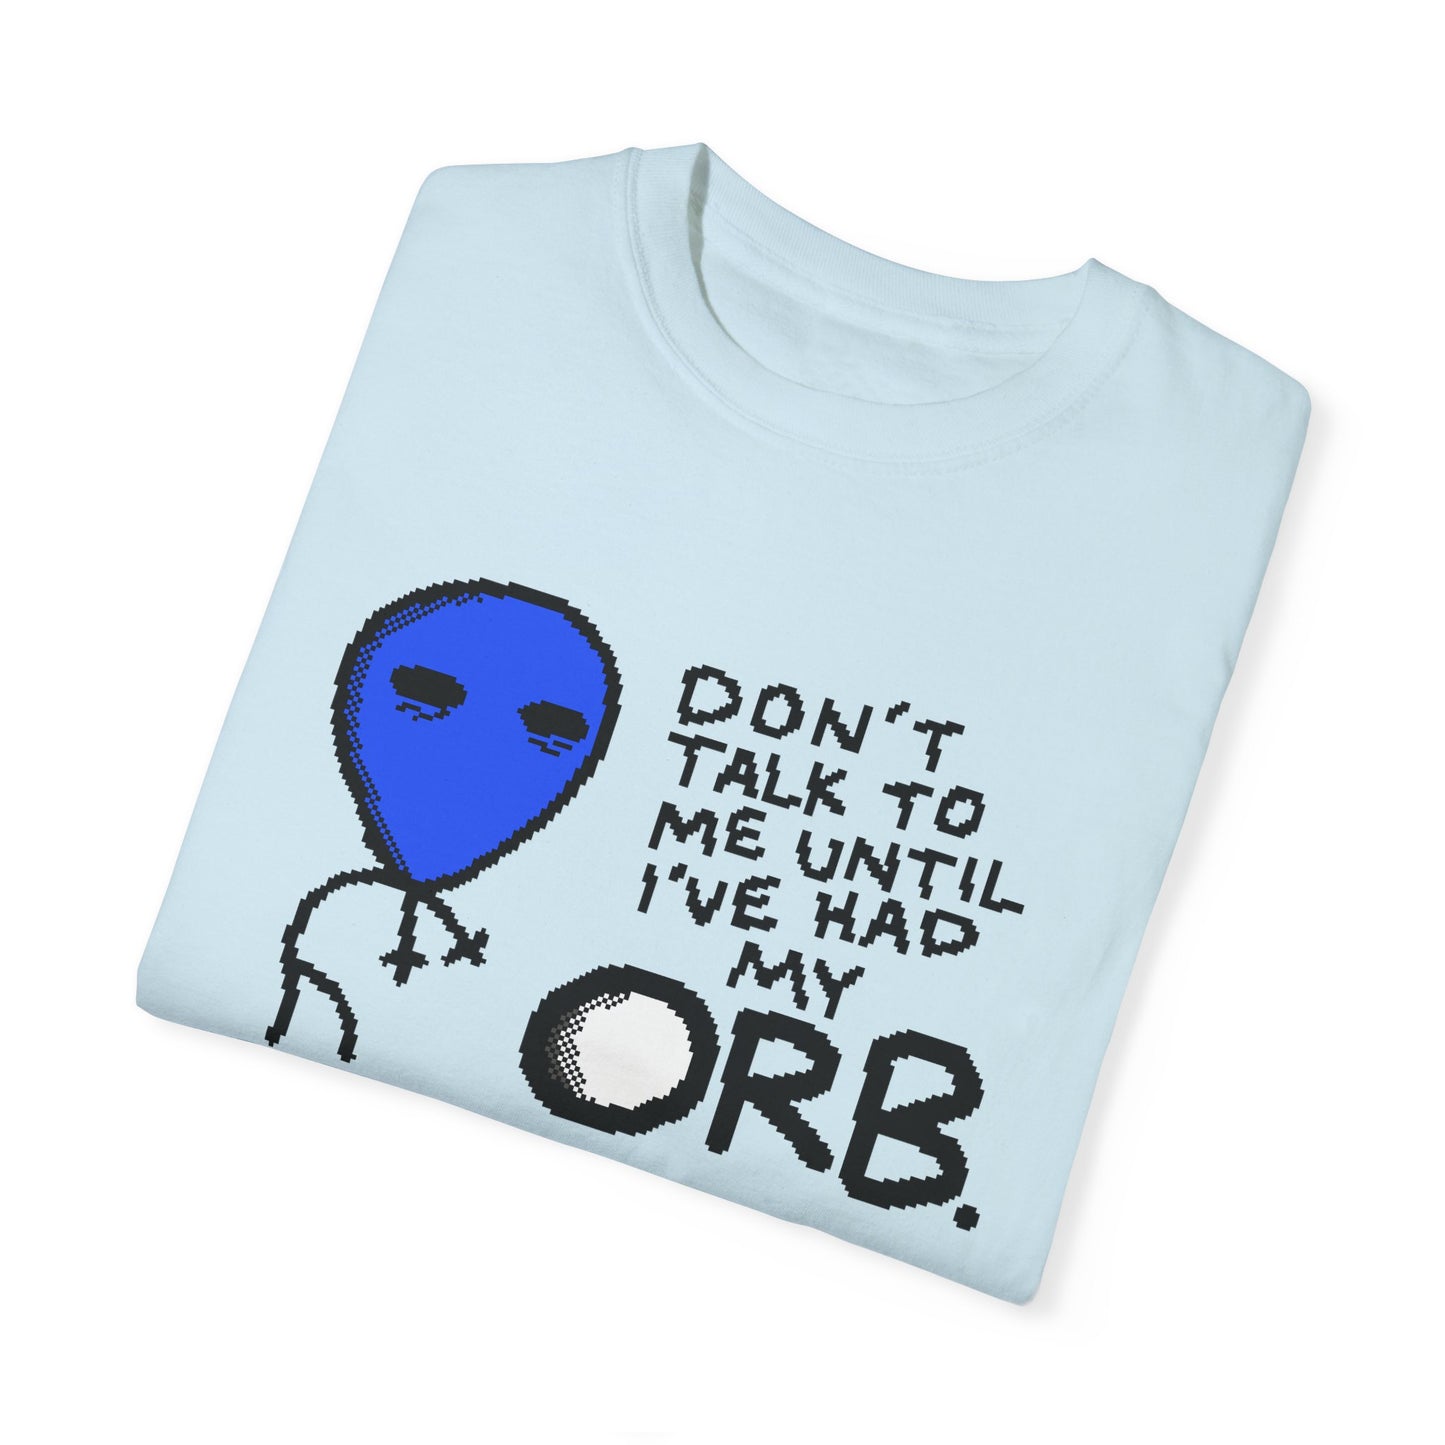 kyle orb shirt